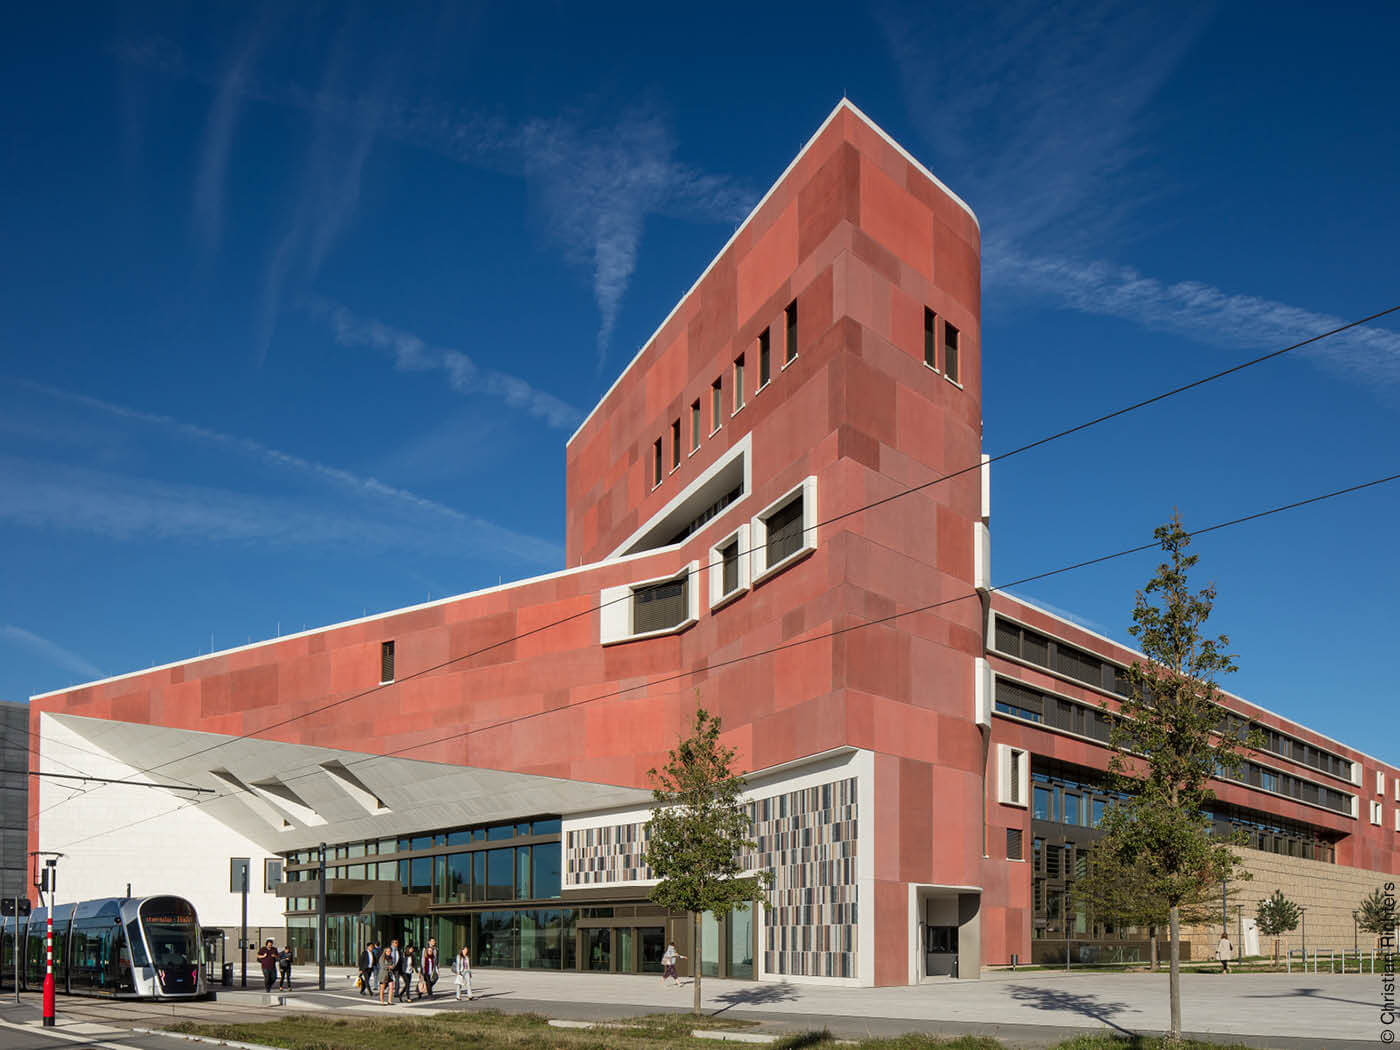 Nationalbibliothek Luxemburg mit roter Fassade